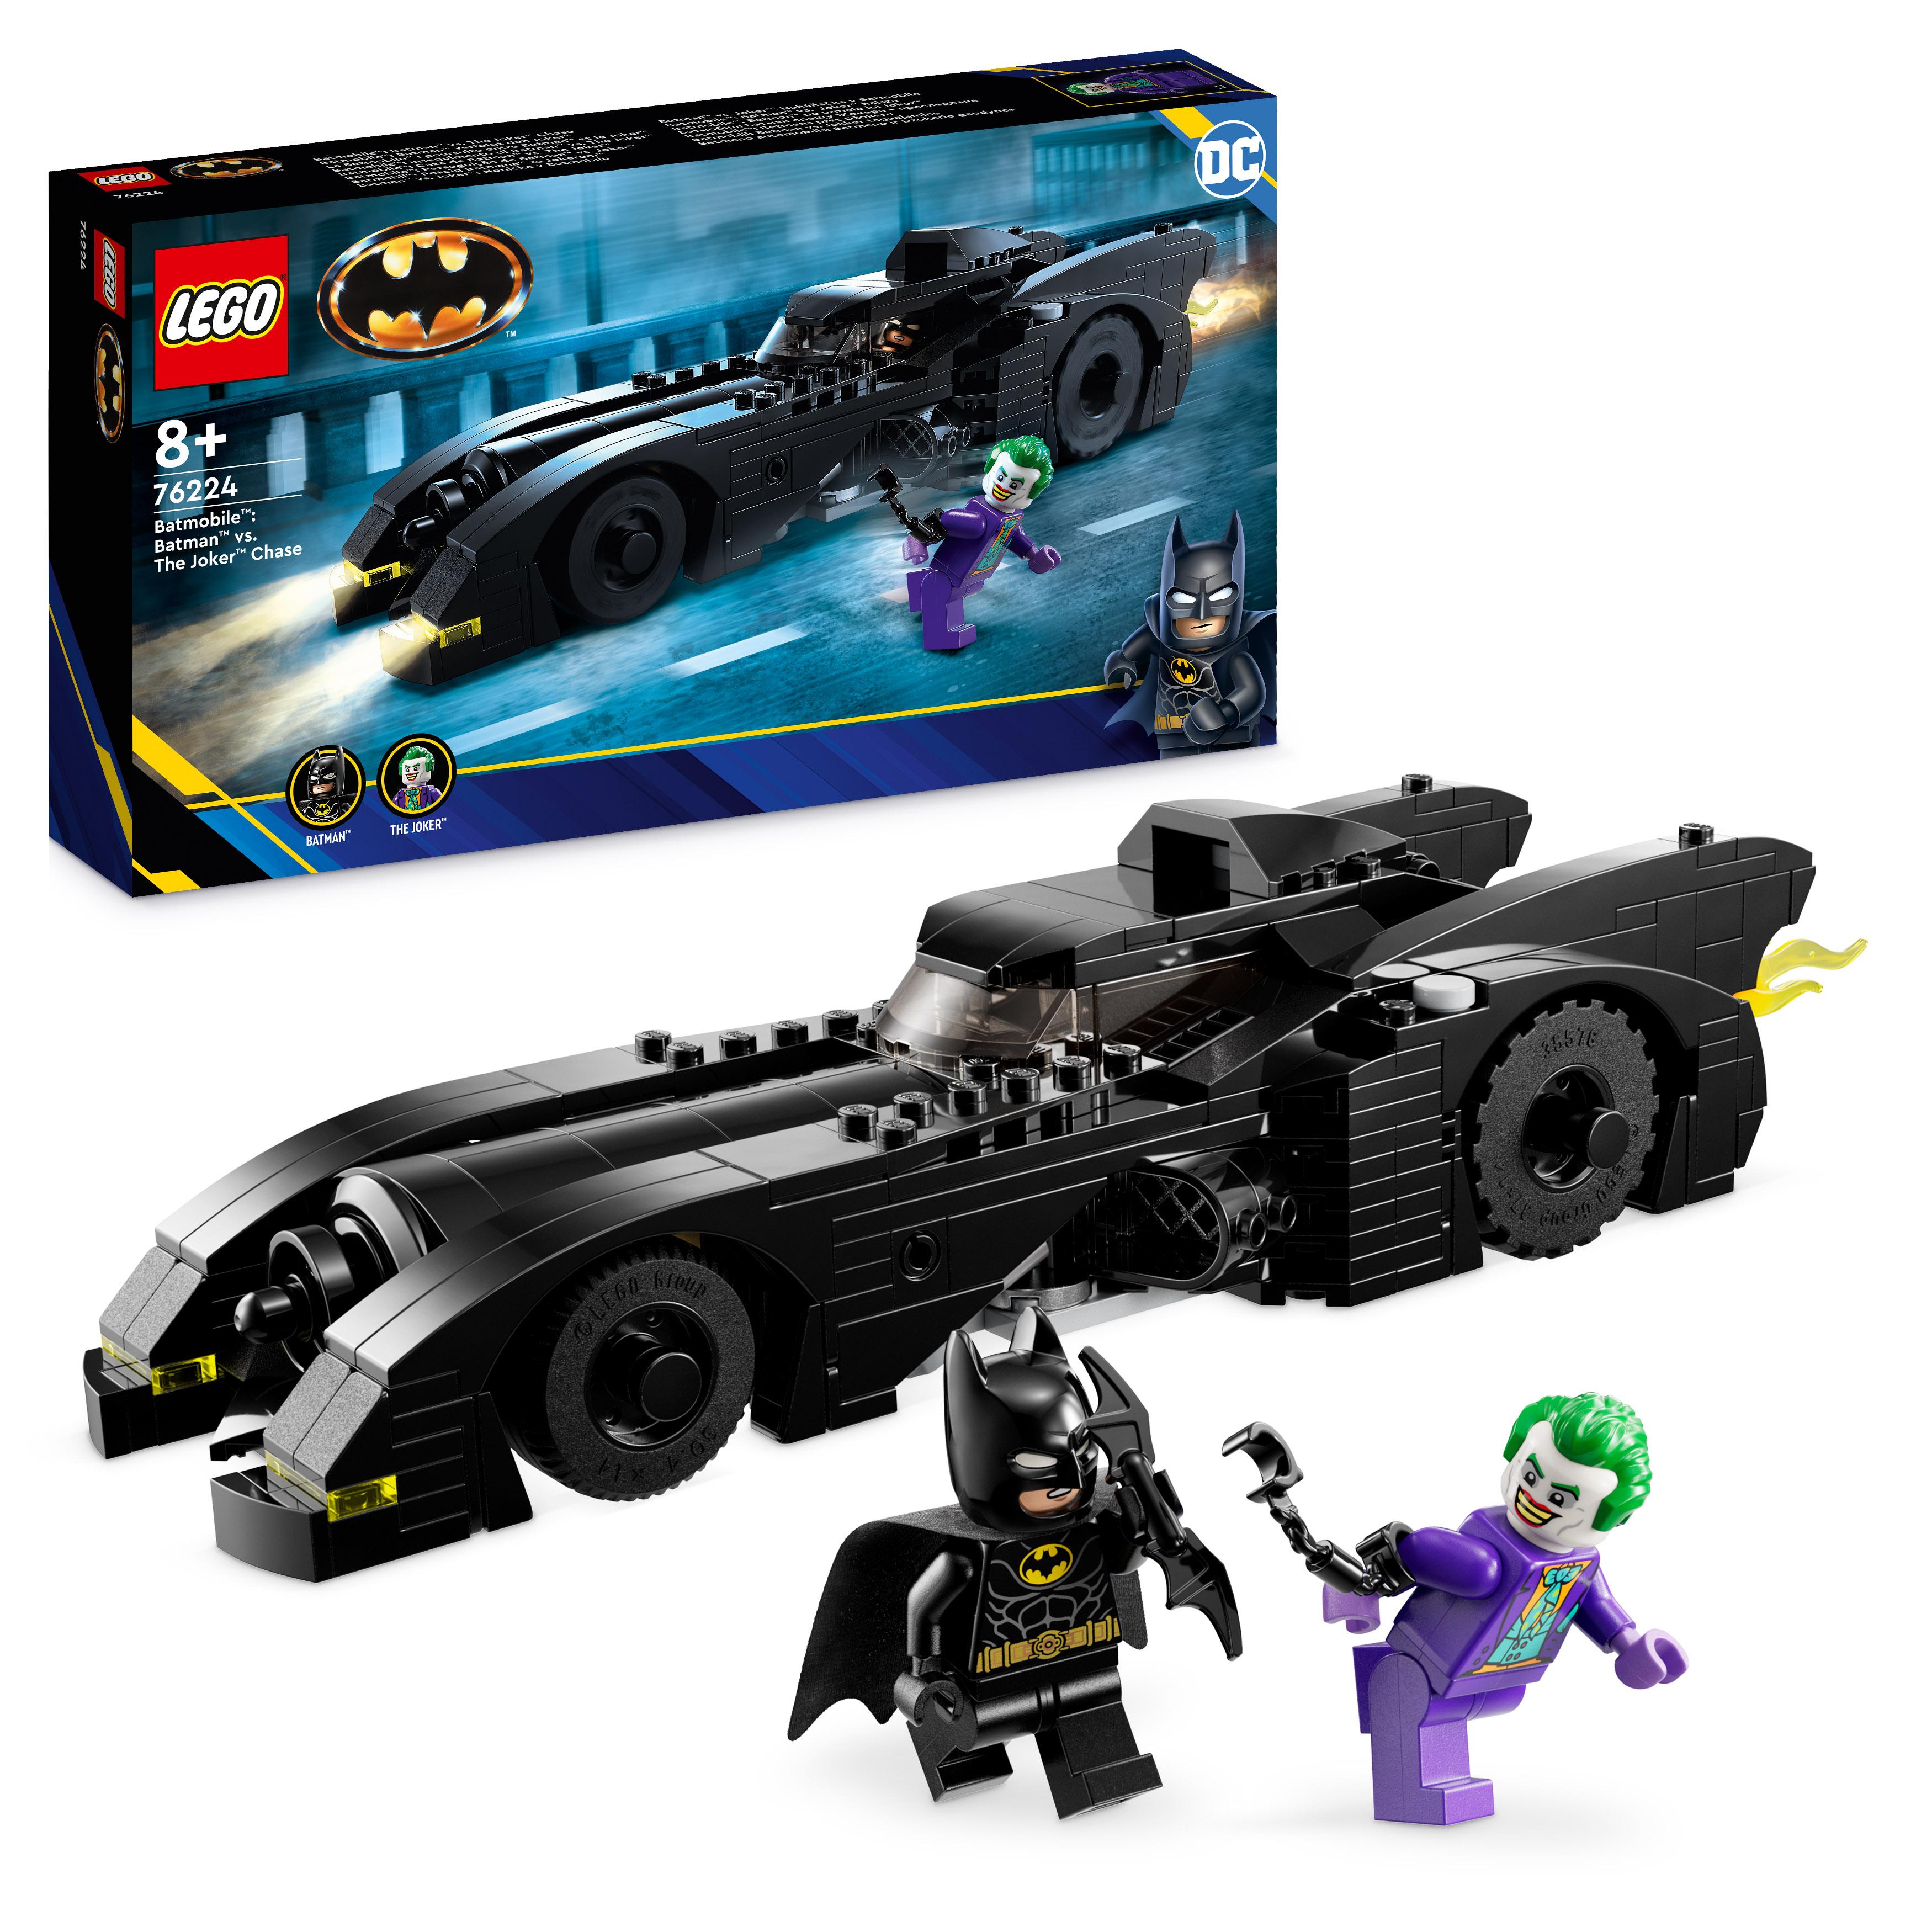 LEGO 76224 DC Batmobile: Batman verfolgt den